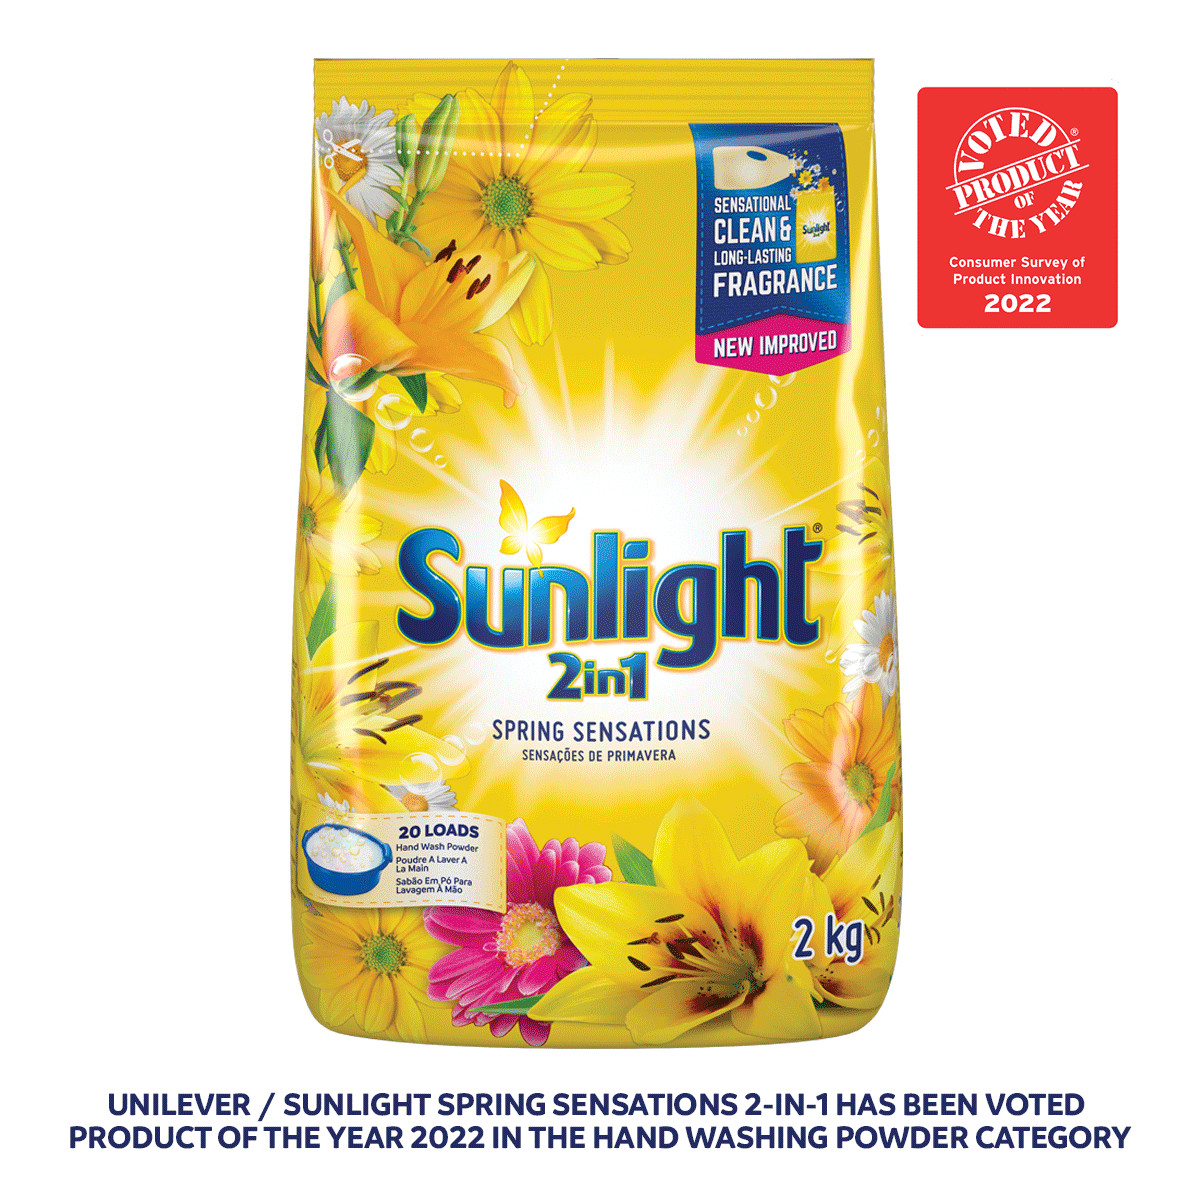 Sunlight 2in1 Spring Sensations Handwash Washing Powder